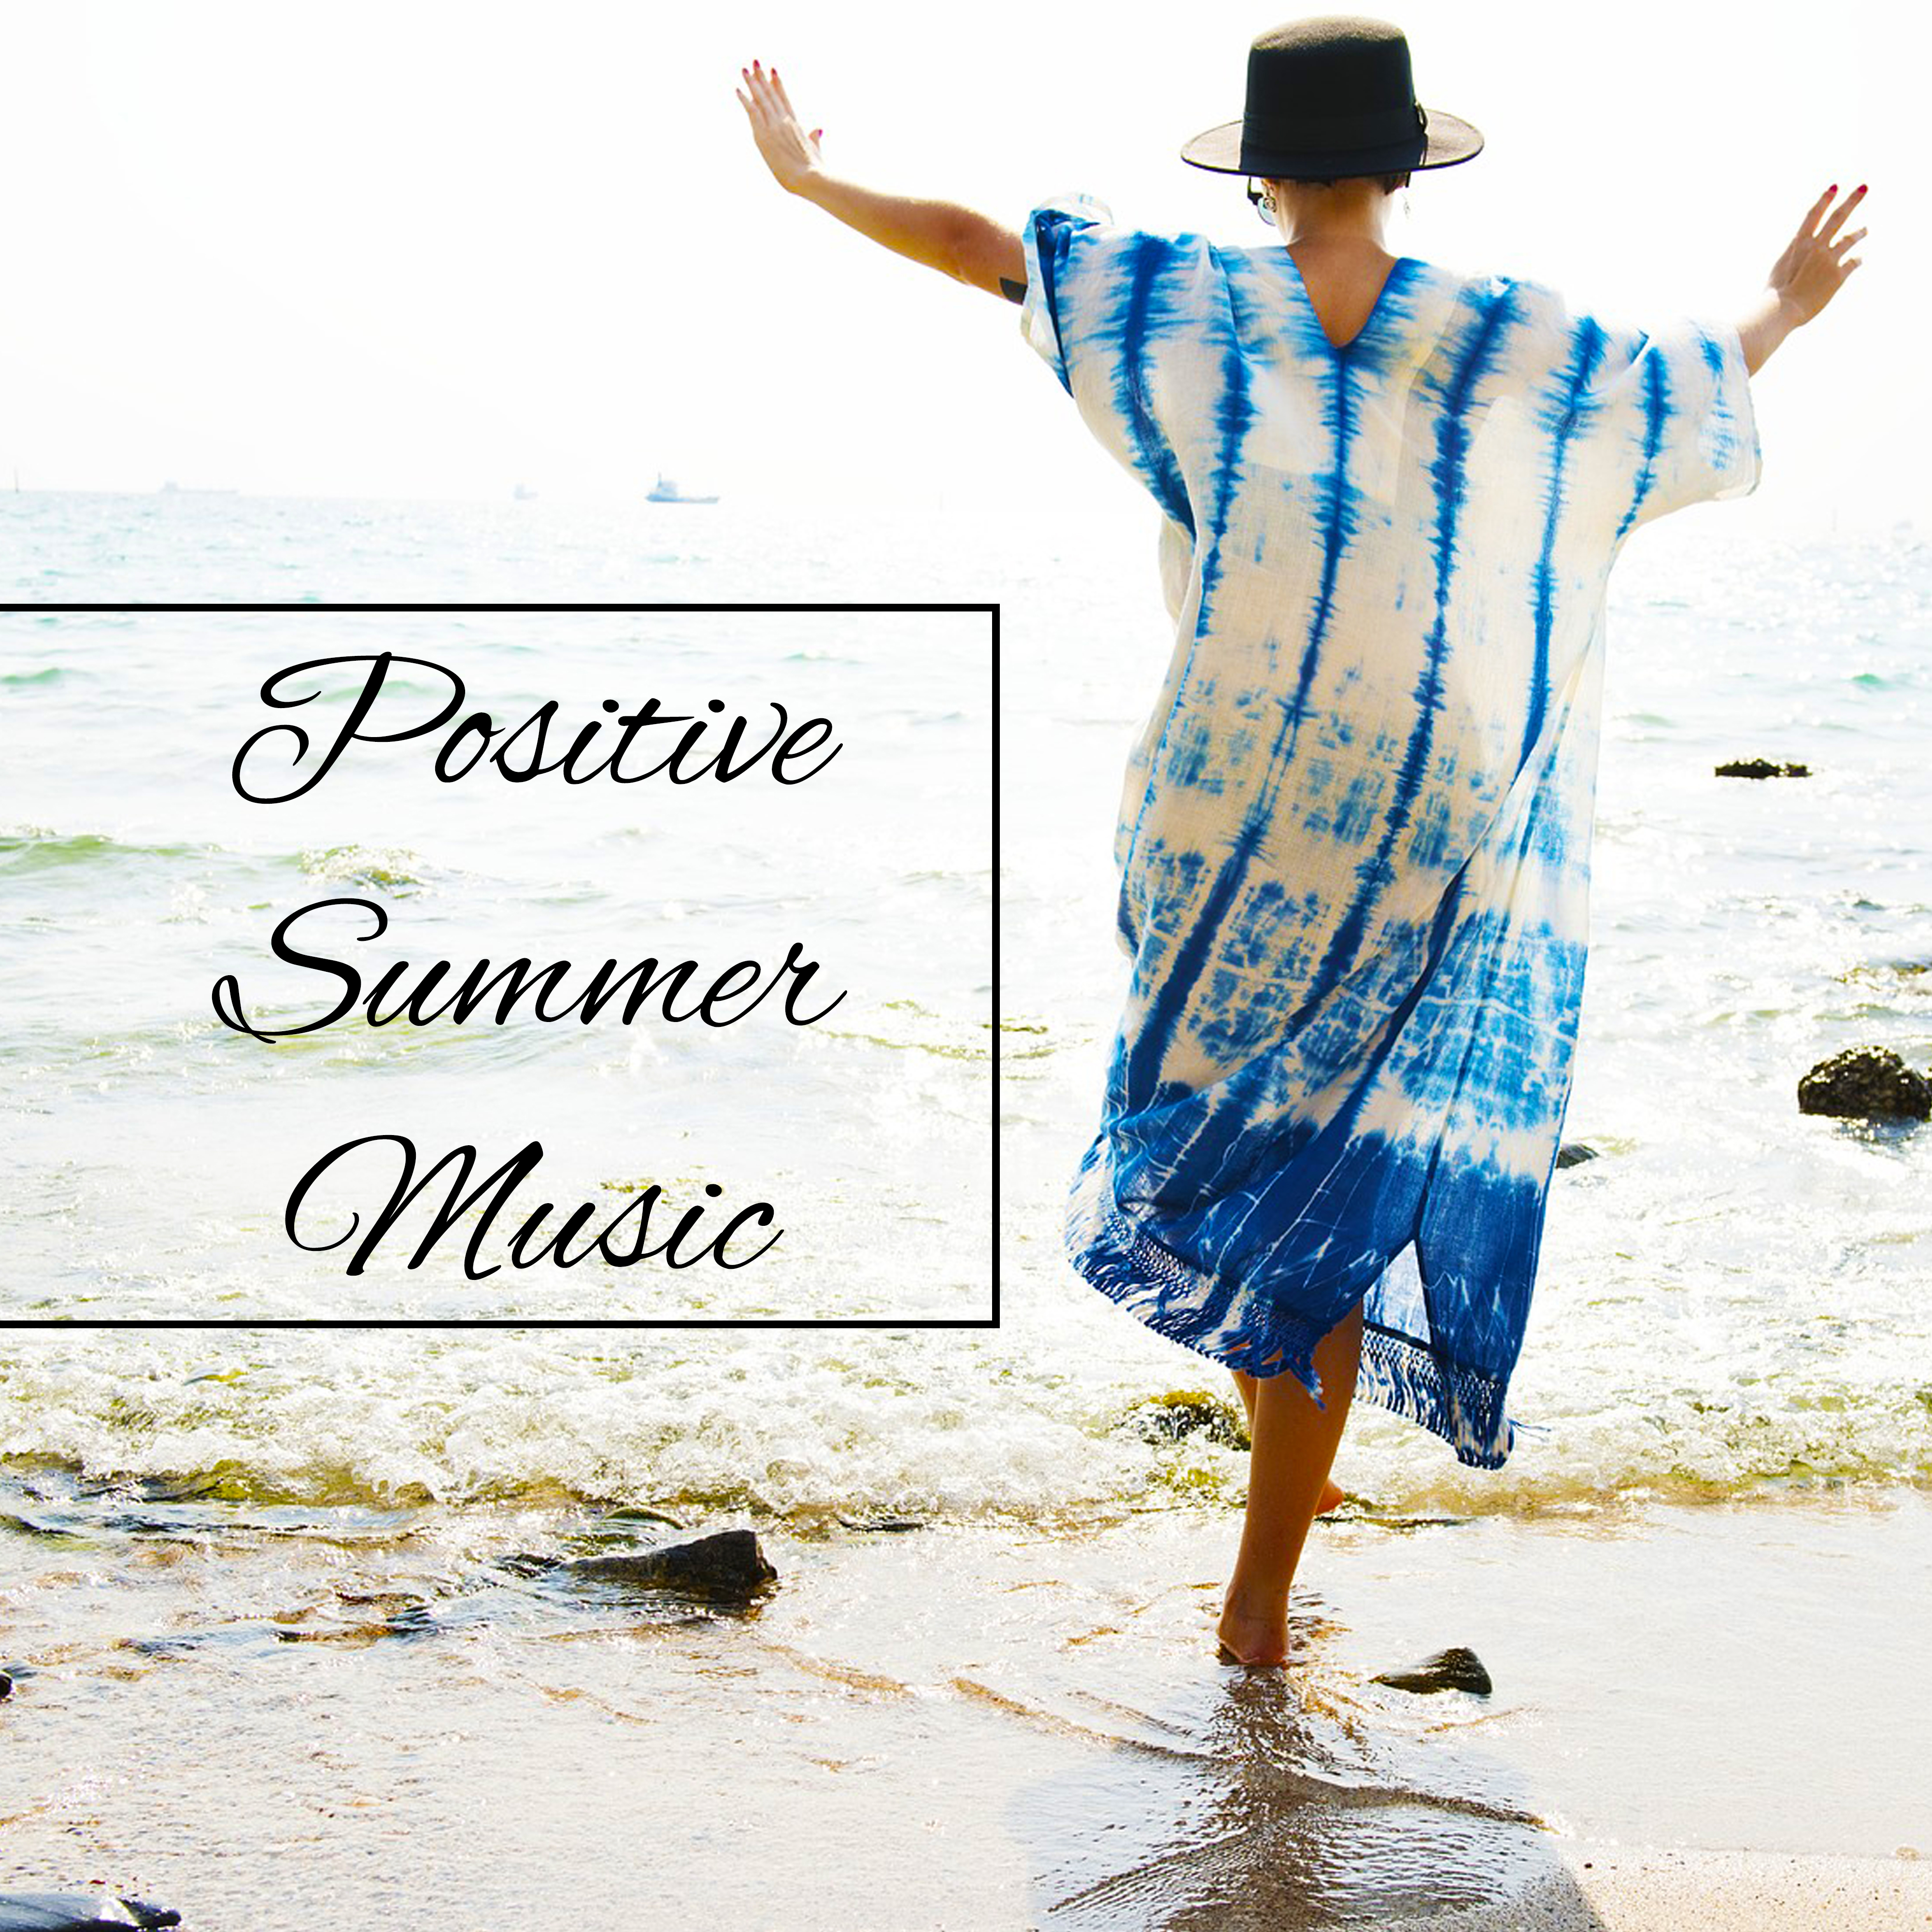 Positive Summer Music  Relaxing Holiday Vibes, Sun  Beach, Summer Journey Music